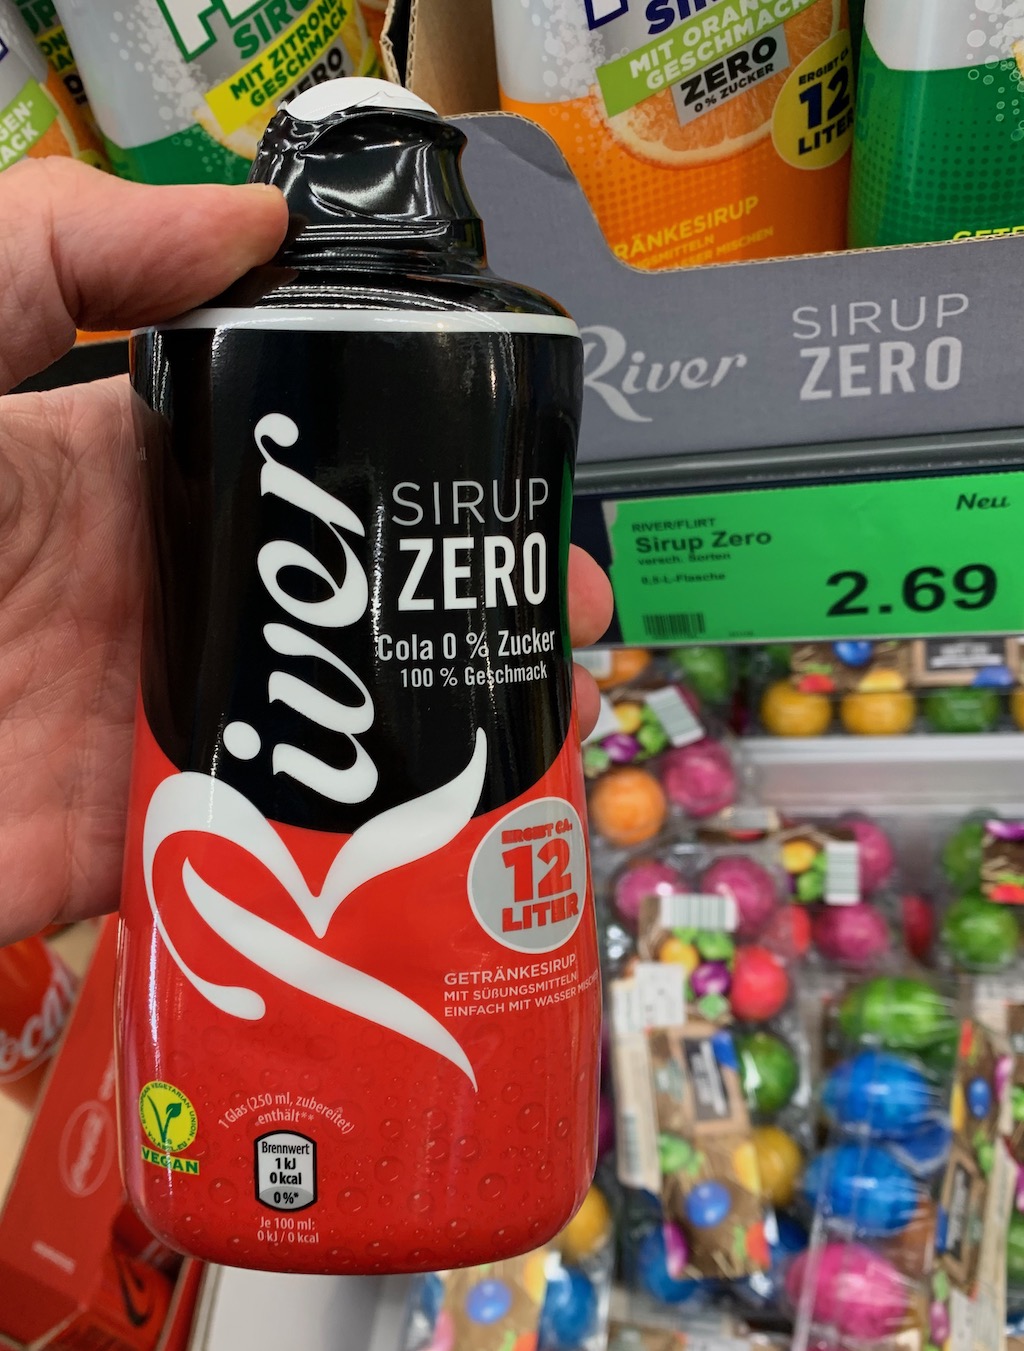 https://naschkater.com/wp-content/uploads/2022/10/Aldi-River-Cola-Sirup-Zero-Coca-Cola.jpeg